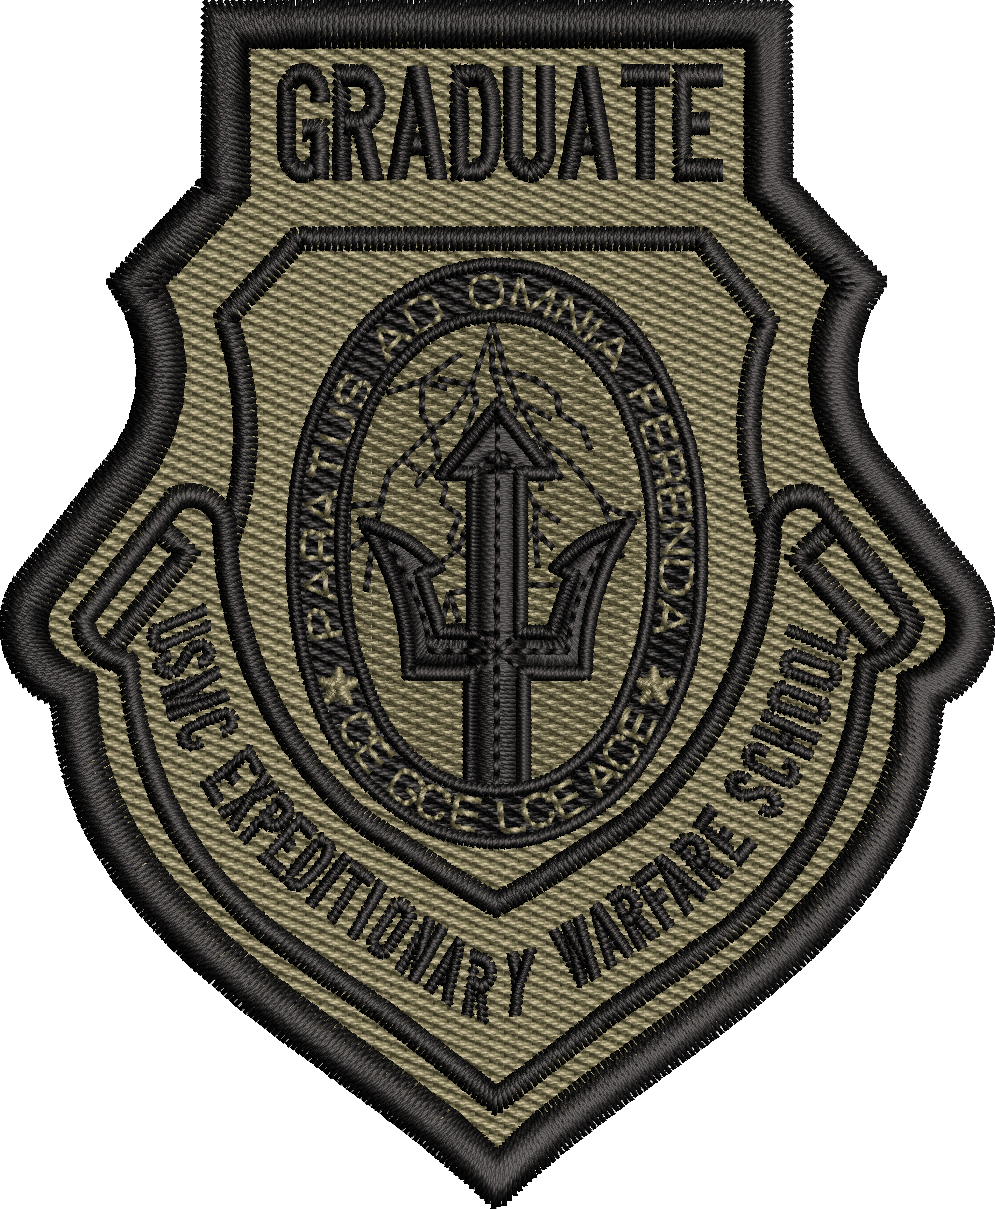 Graduate - USMC Expeditionary Warfare School - OLIVE DRAB